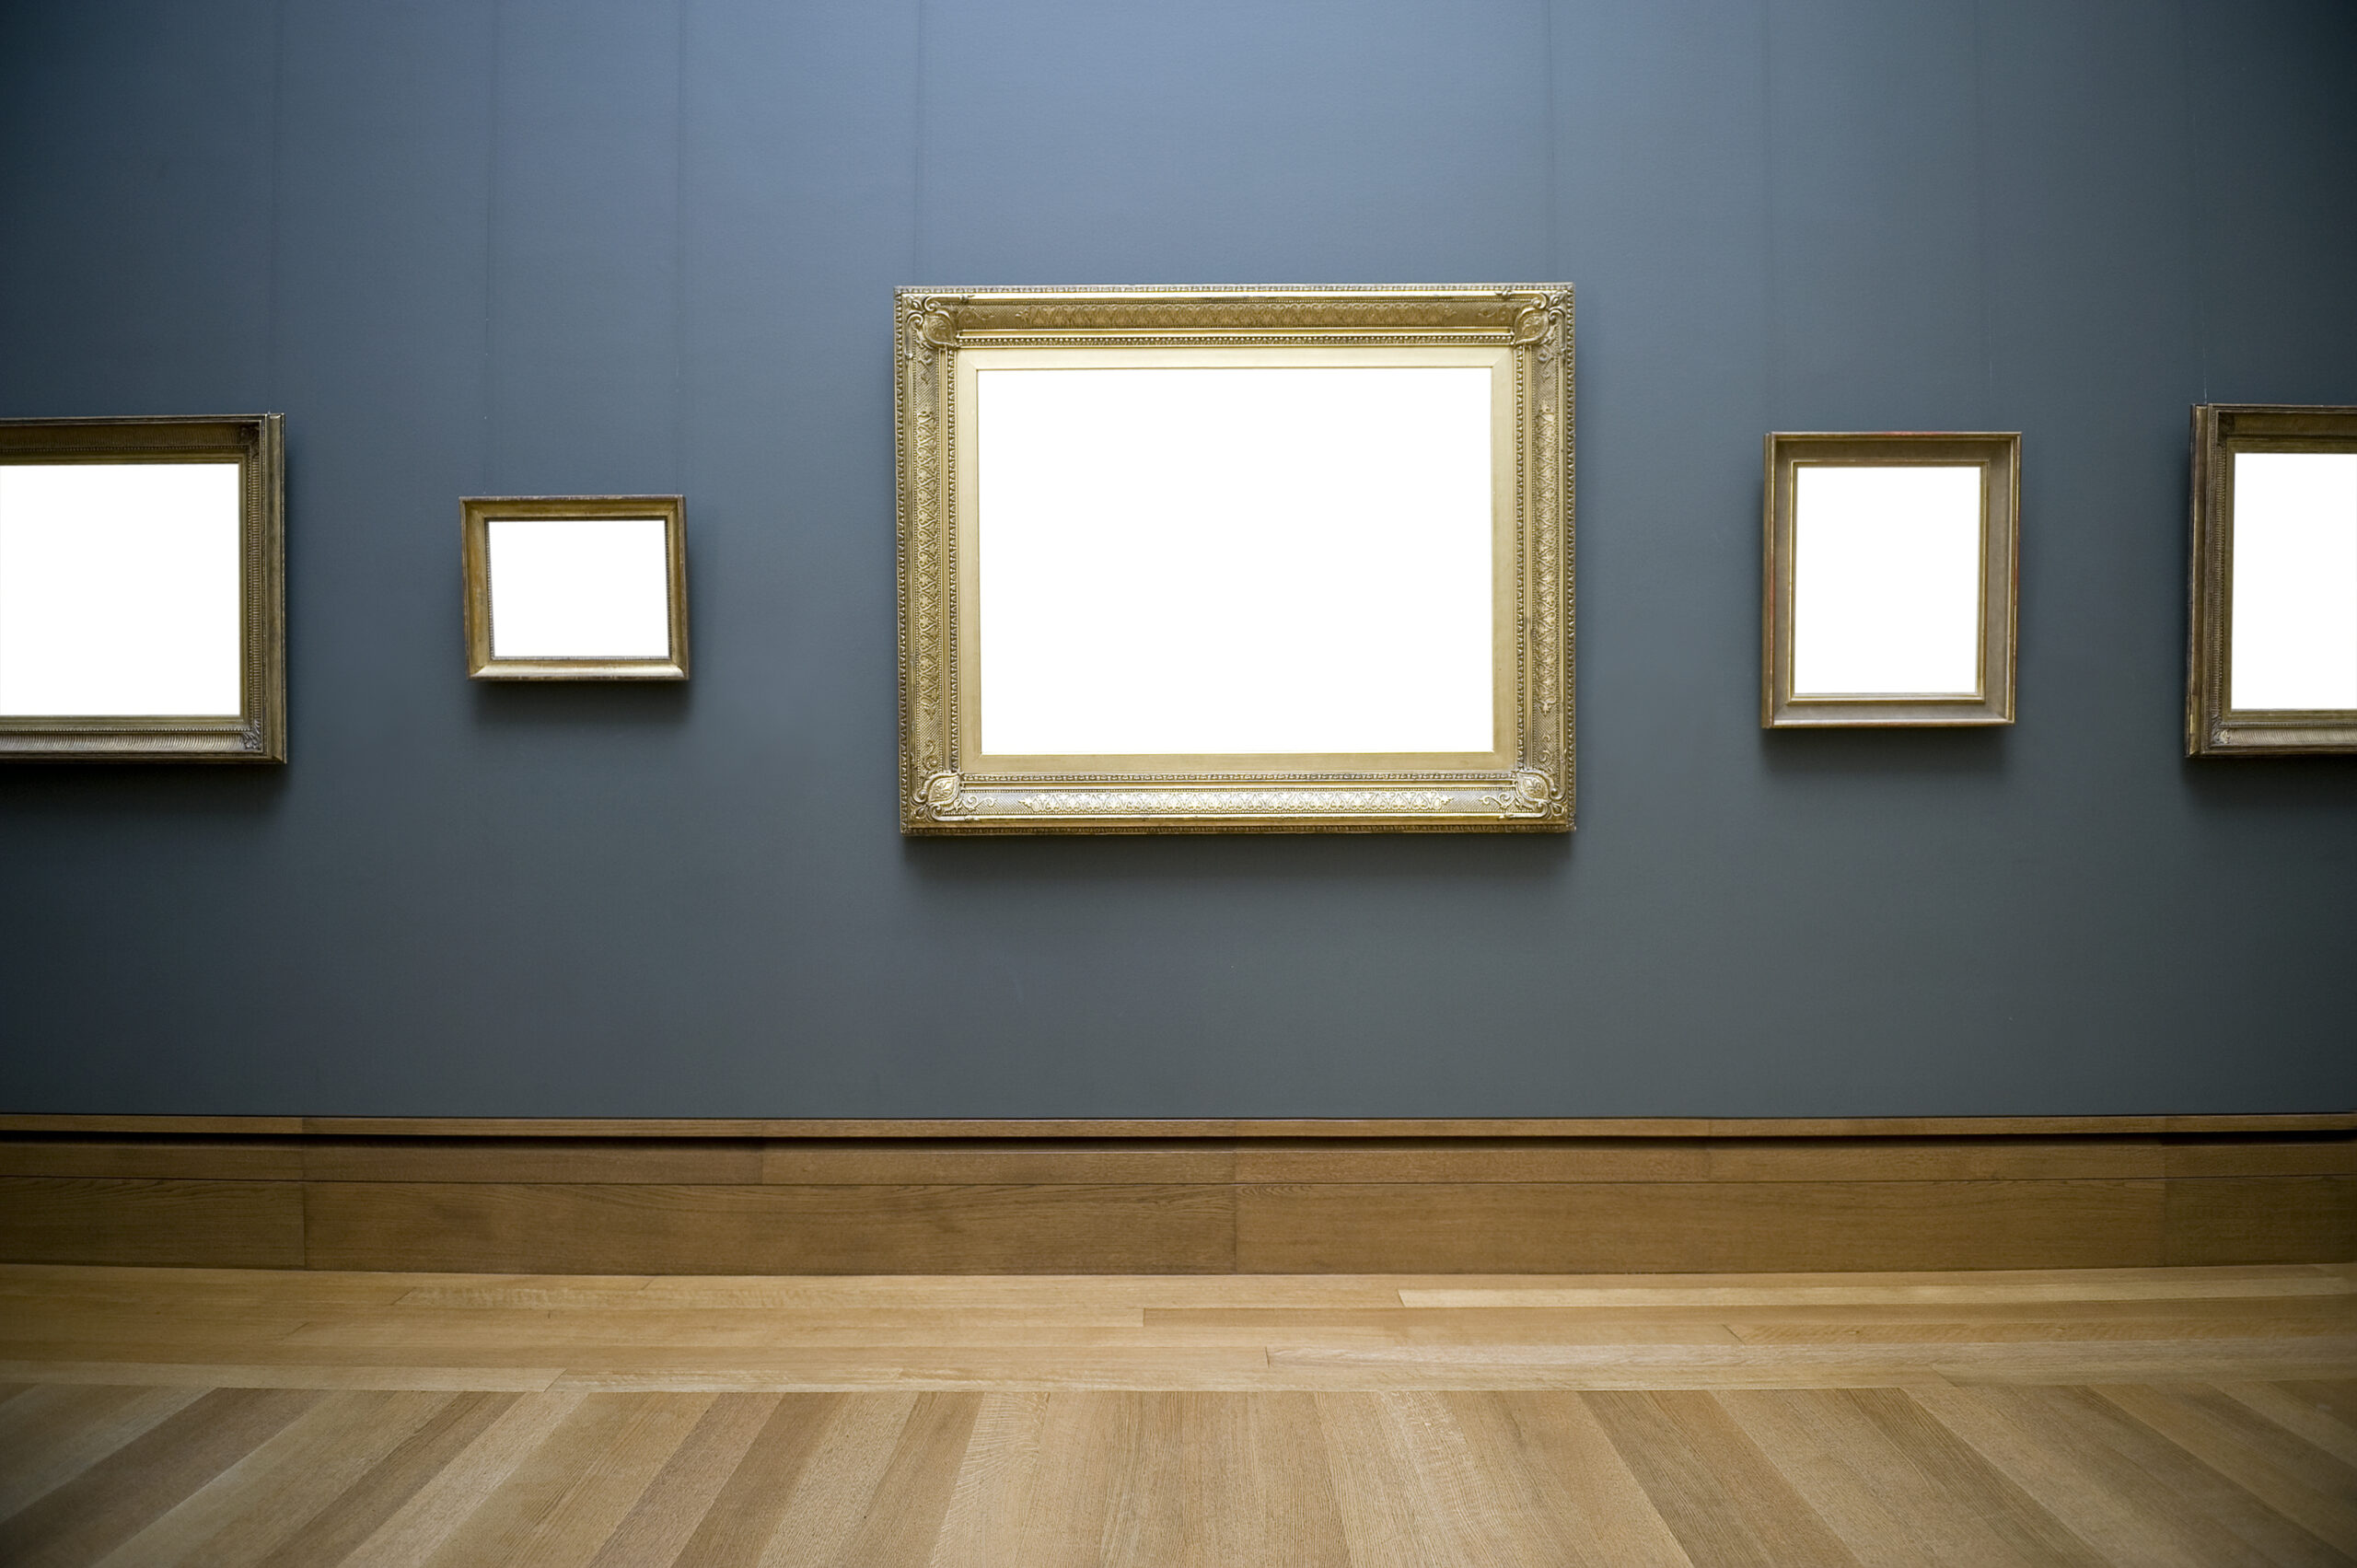 Add gallery walls to enhance glance 